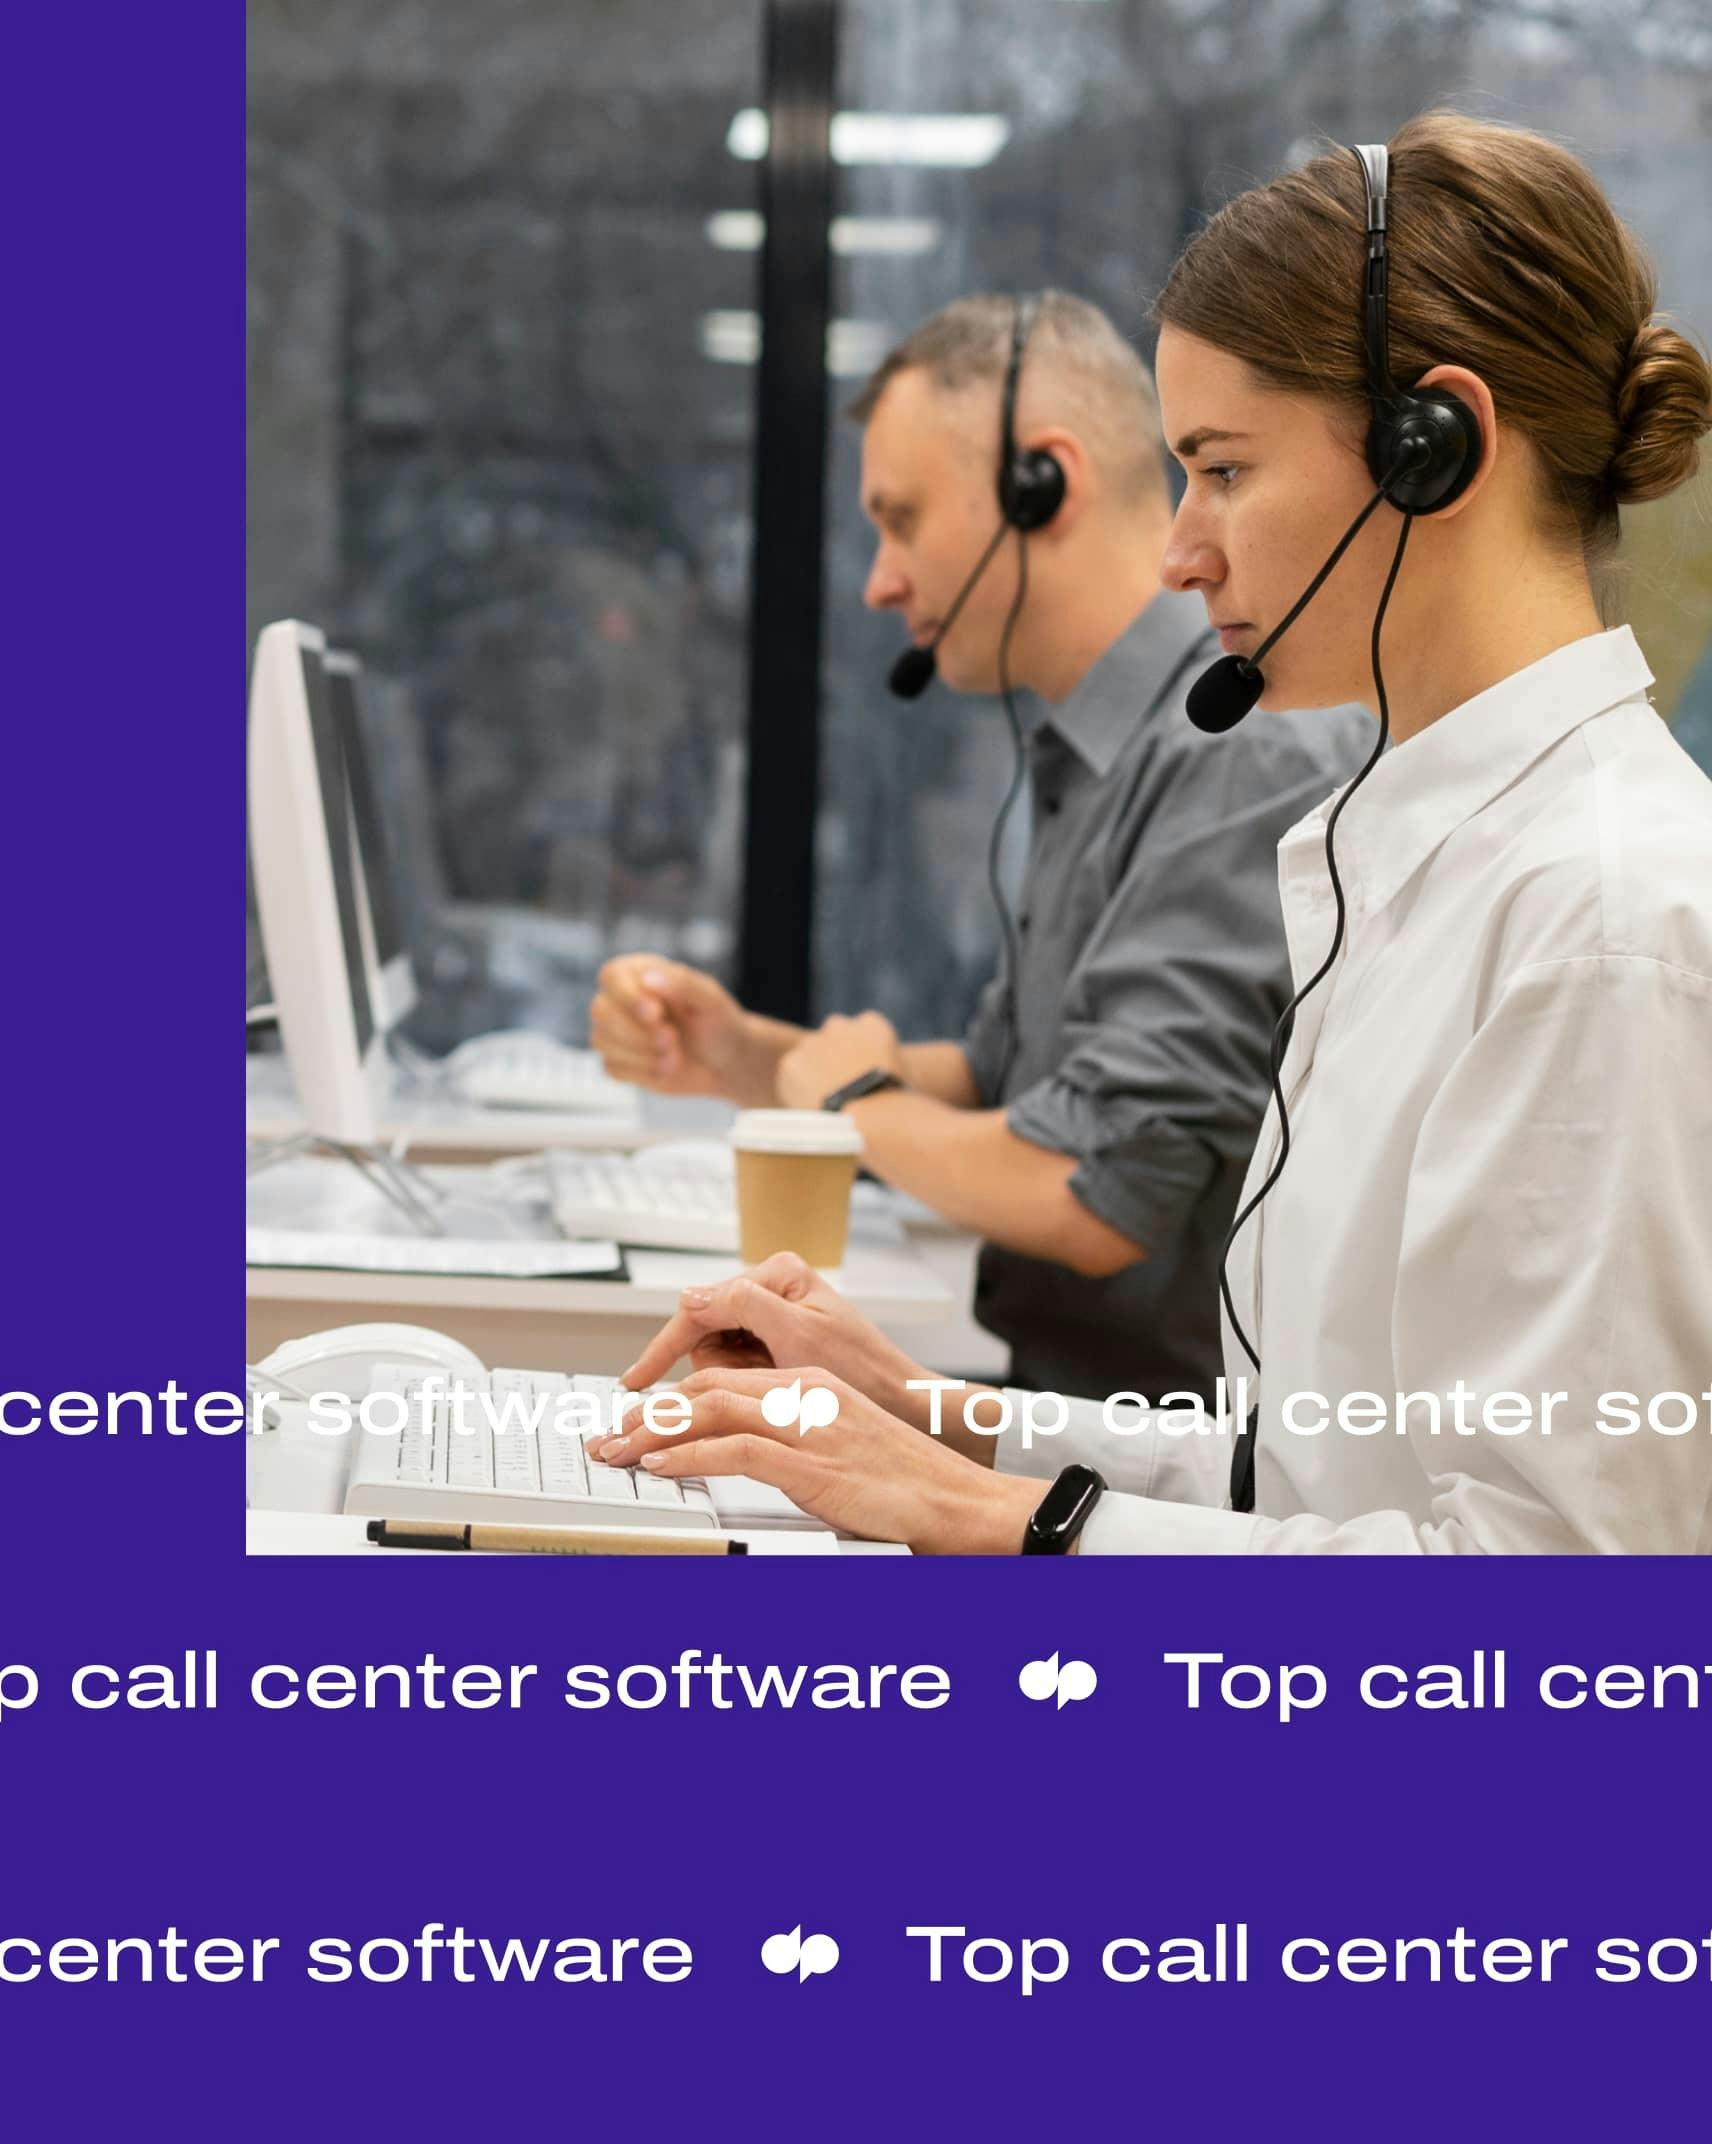 Top call center software